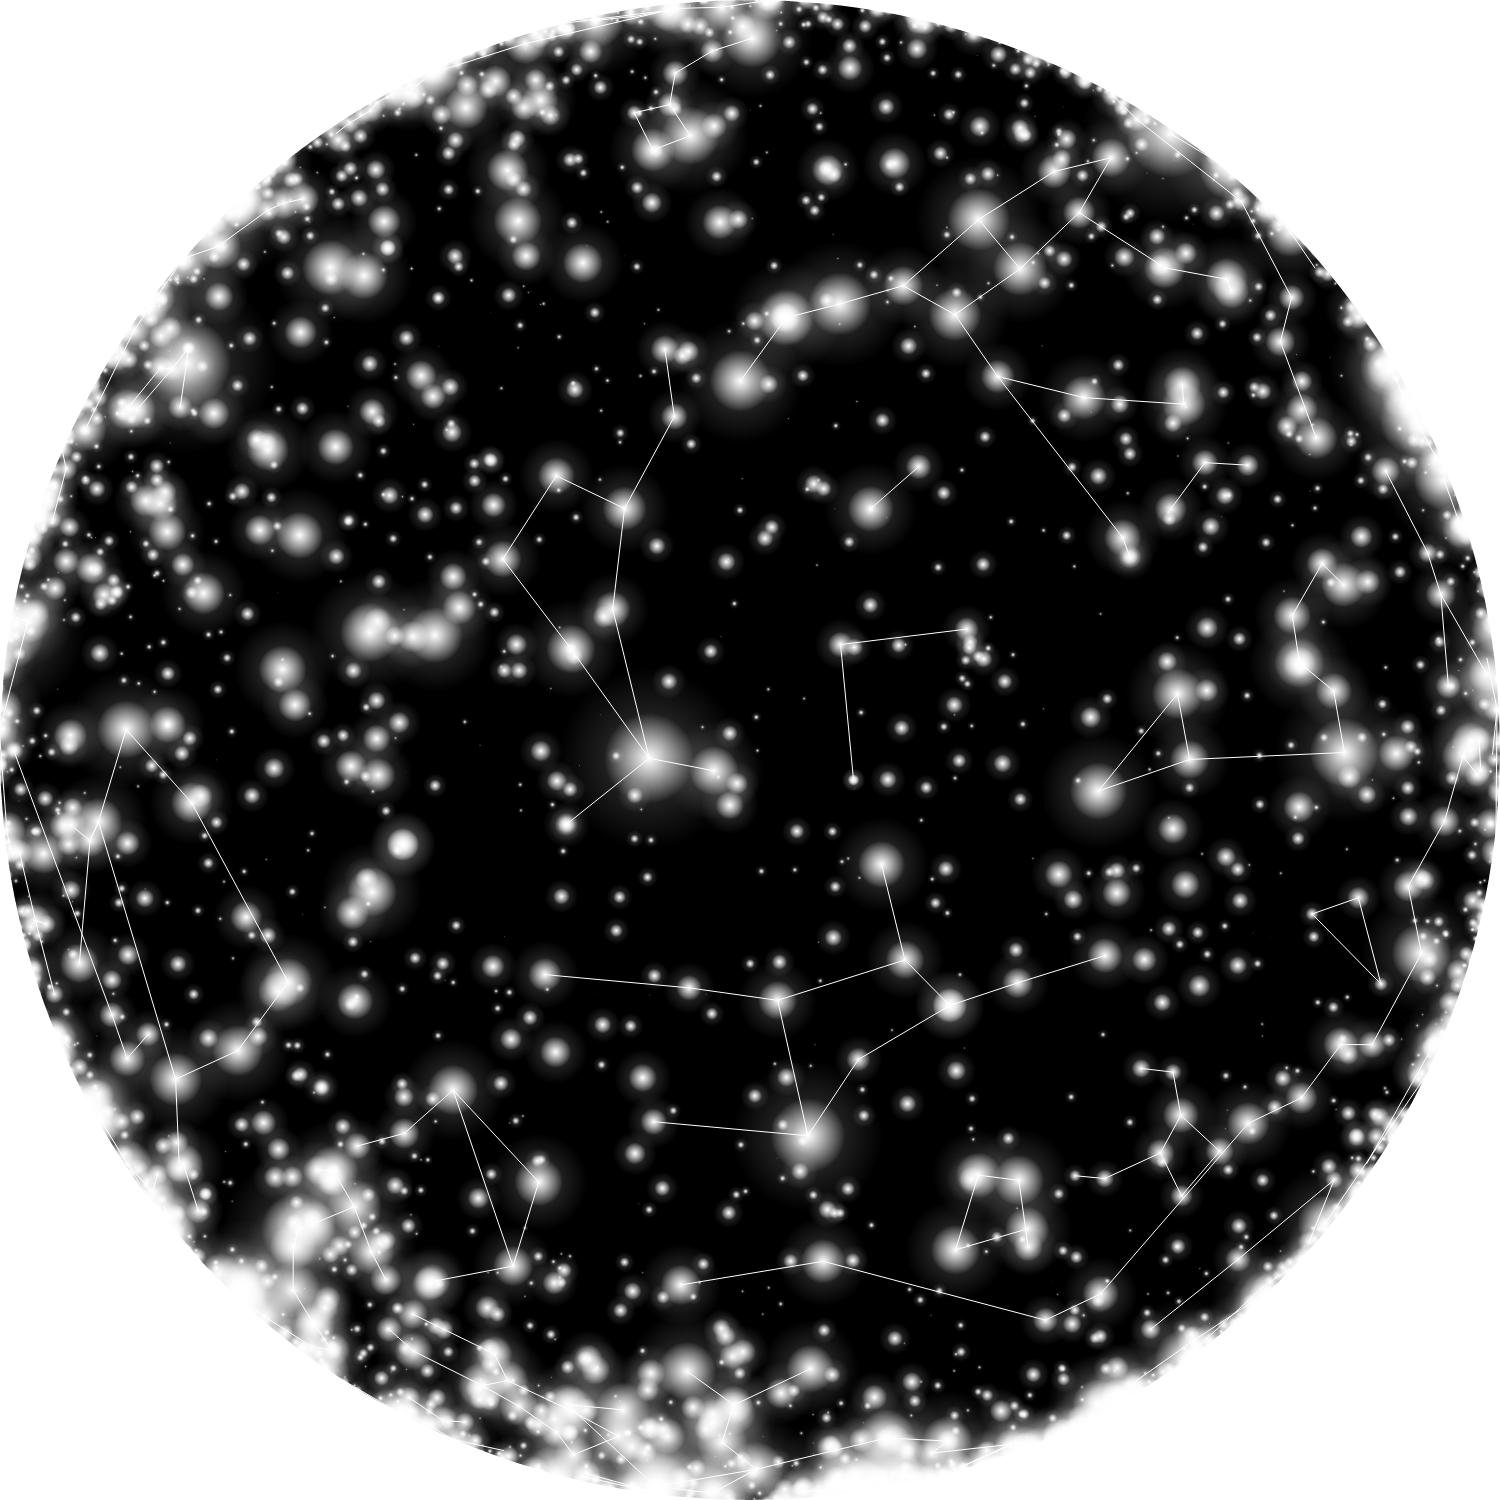 An example starmap